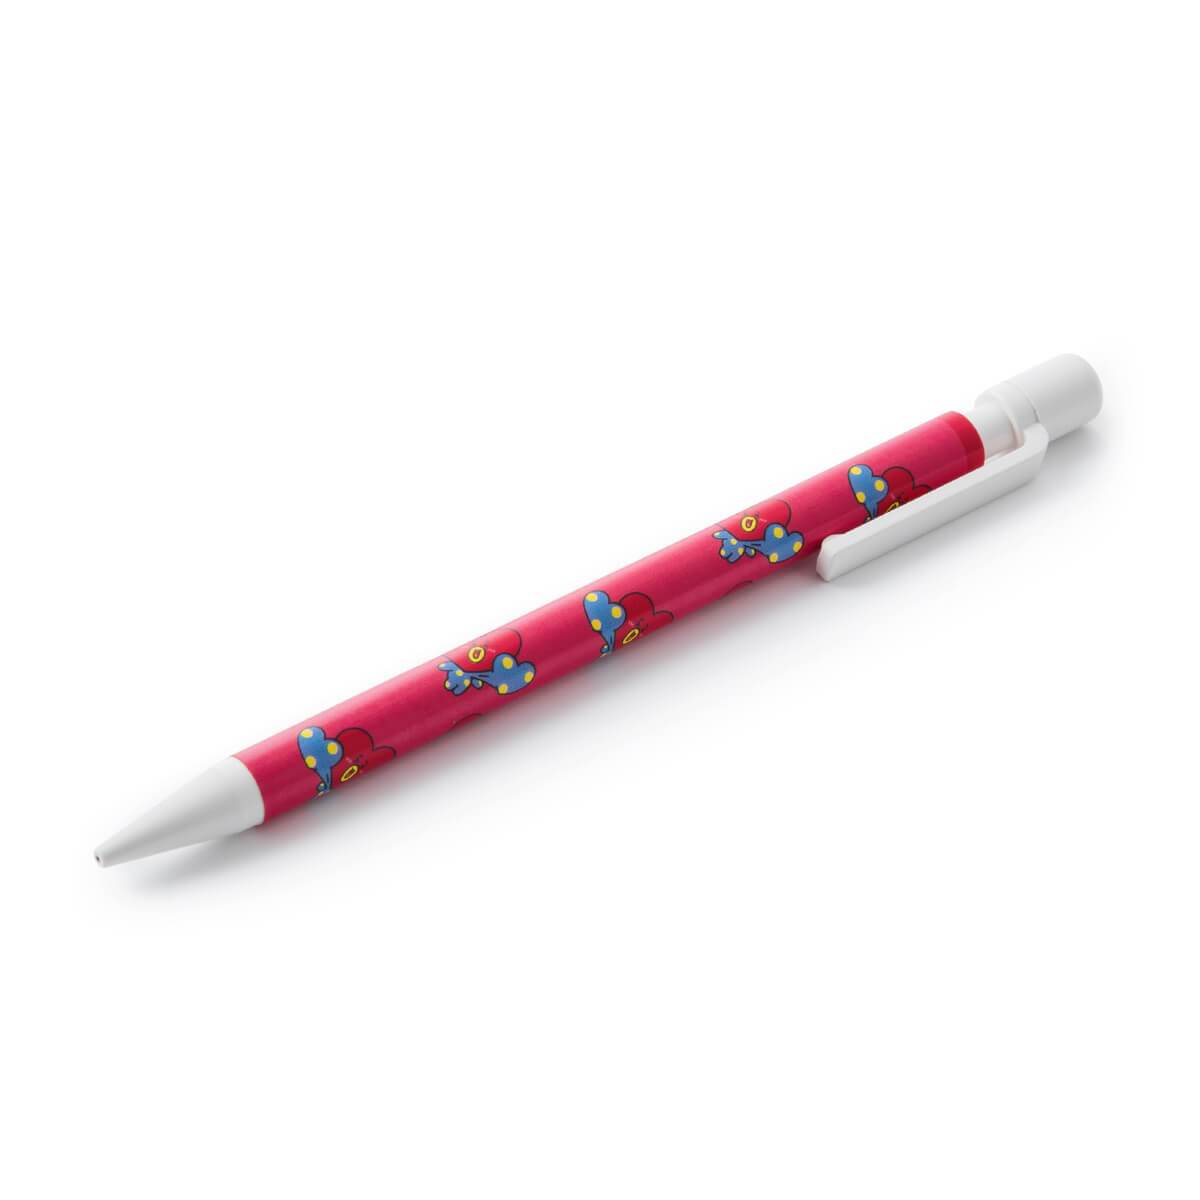 BT21 TATA Mechanical Pencil 0.5mm